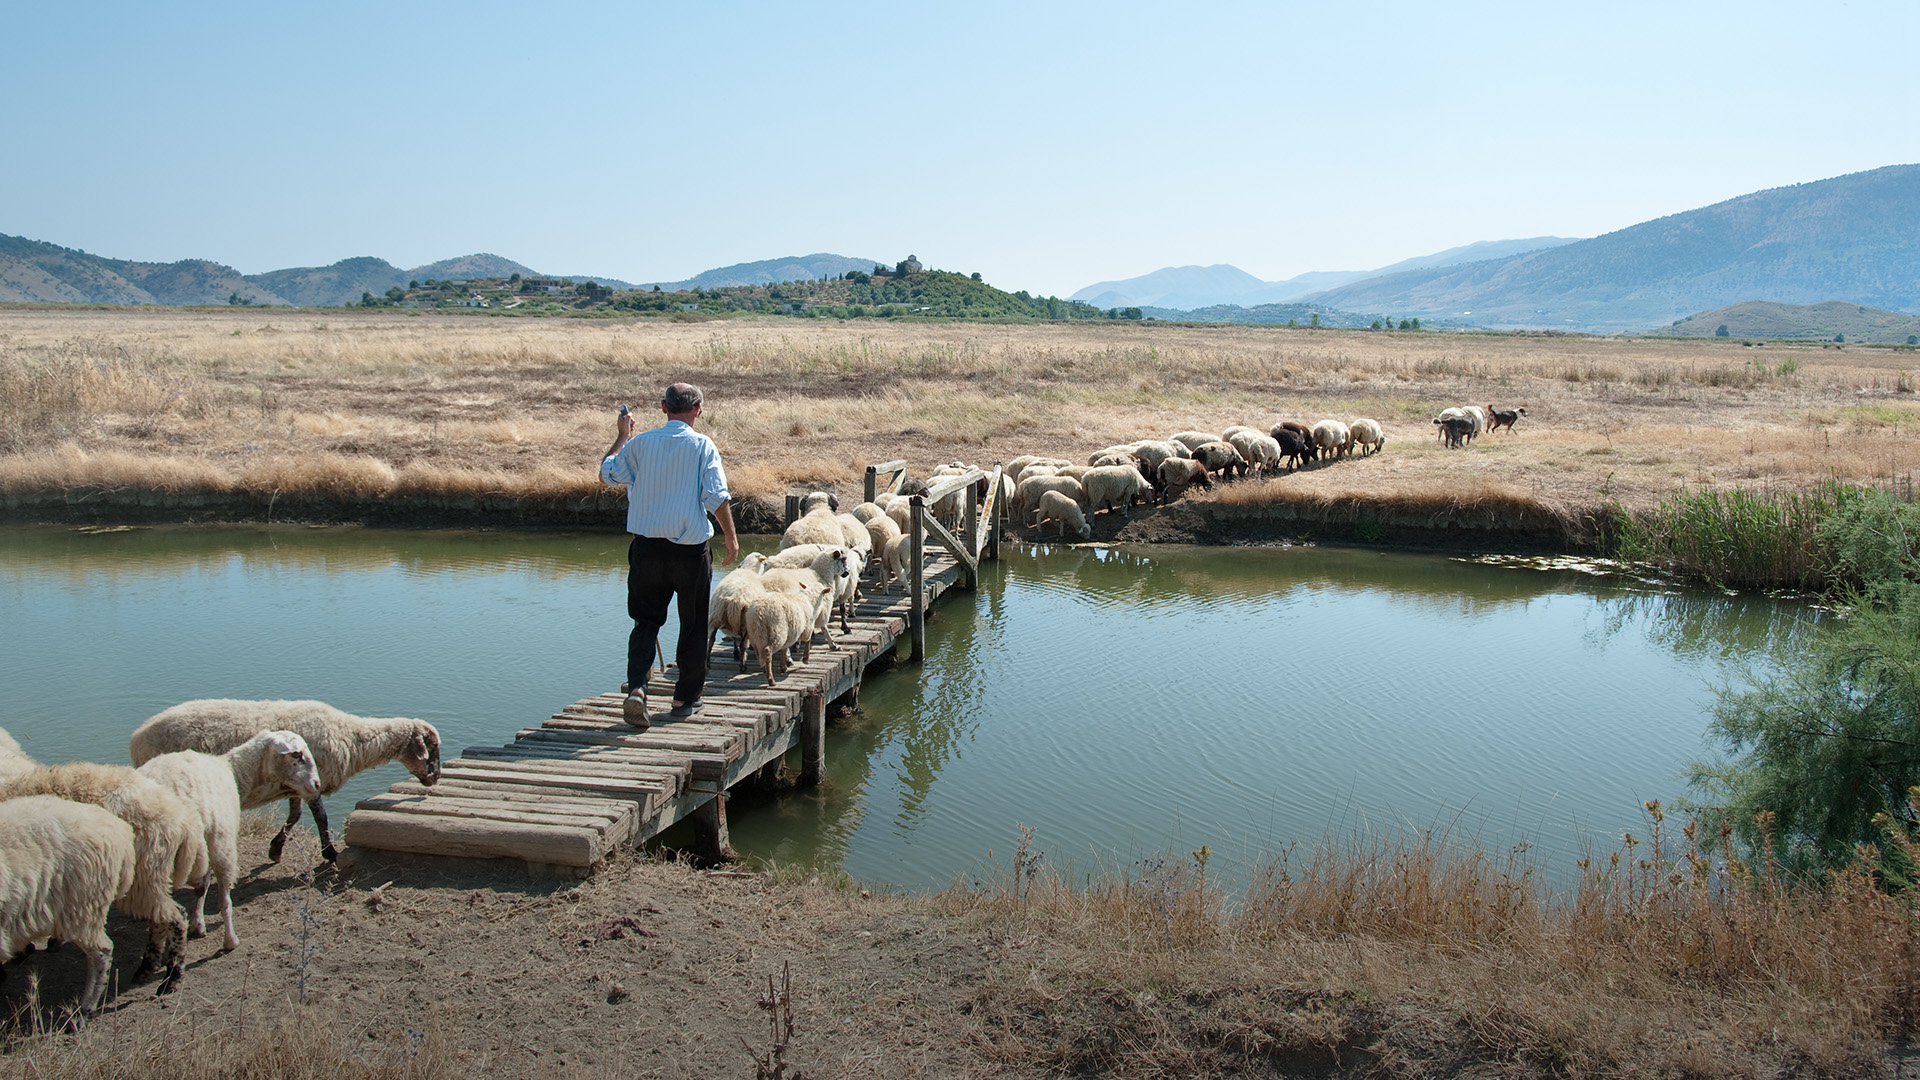 Man shepherding in Albania